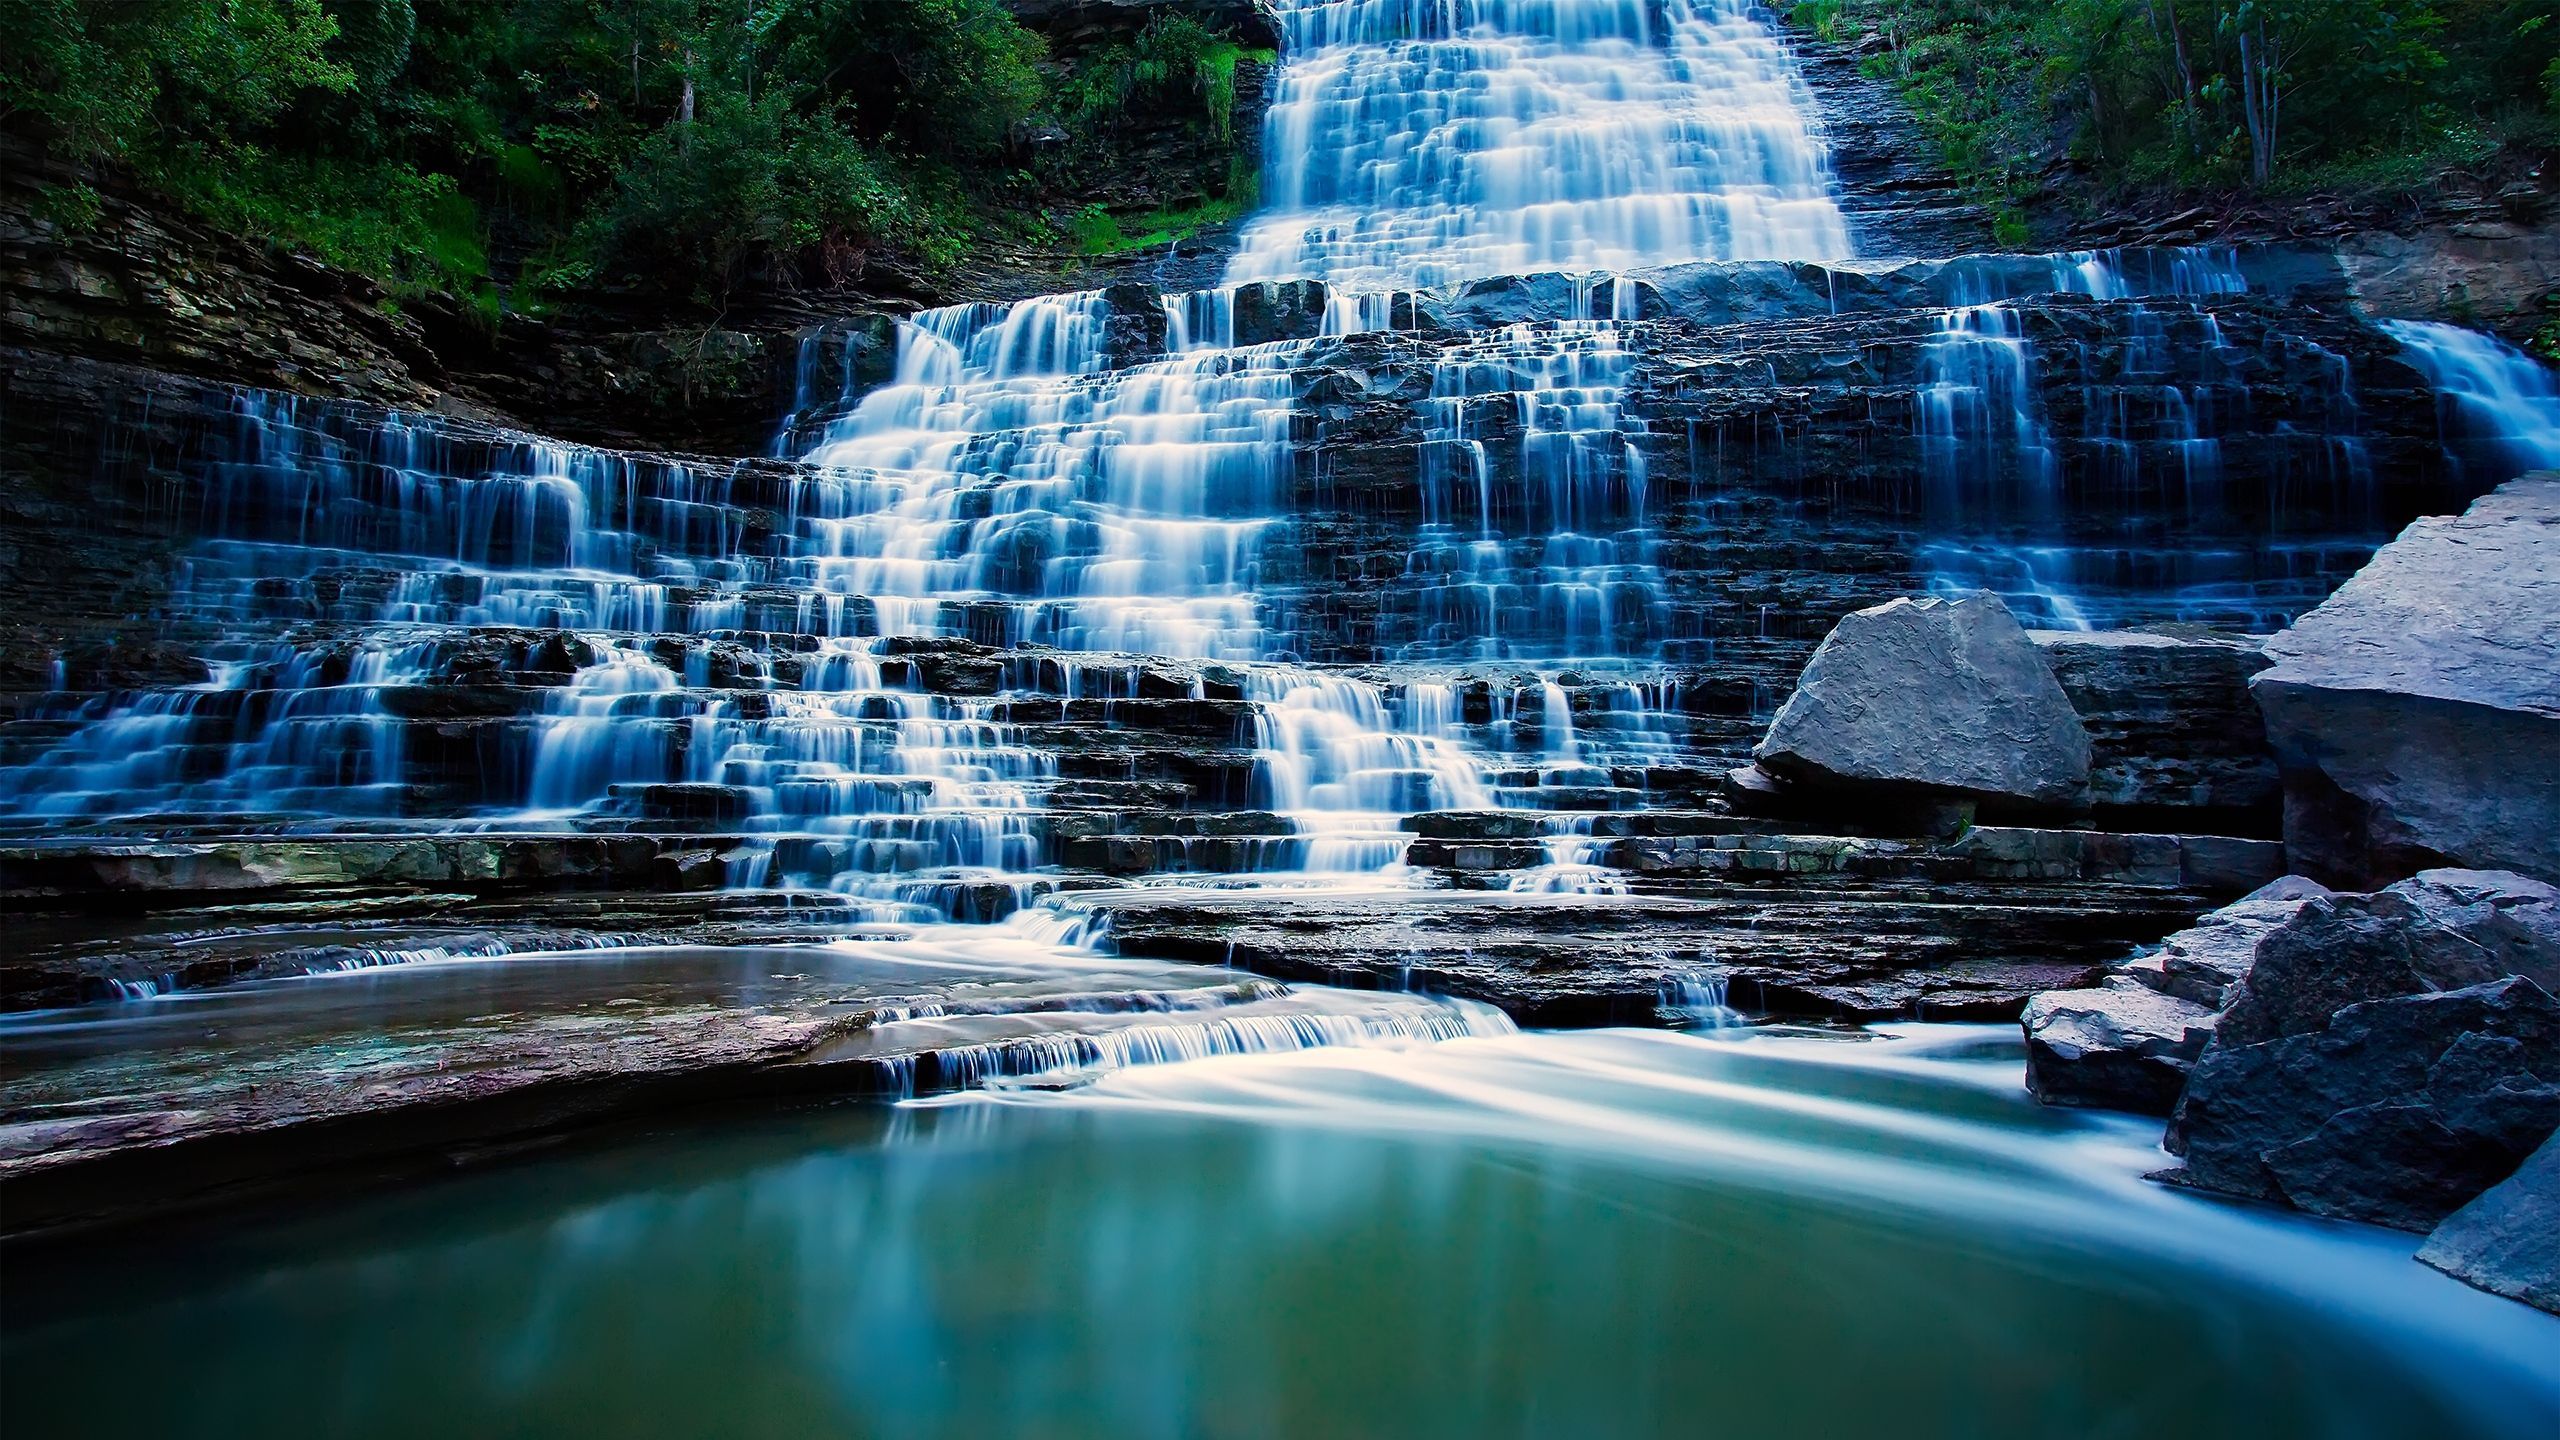 Download Wallpaper 2560x1440 Waterfall, River, Beautiful Mac iMac ...